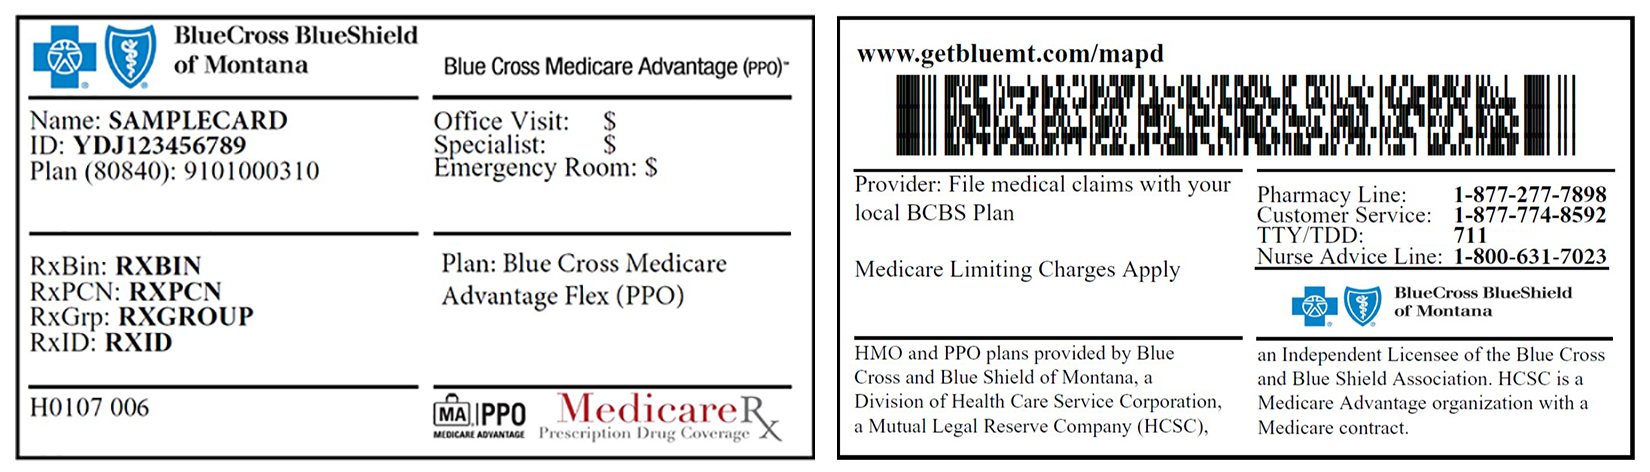 Blue cross Medicare Advantage Flex Sample Card